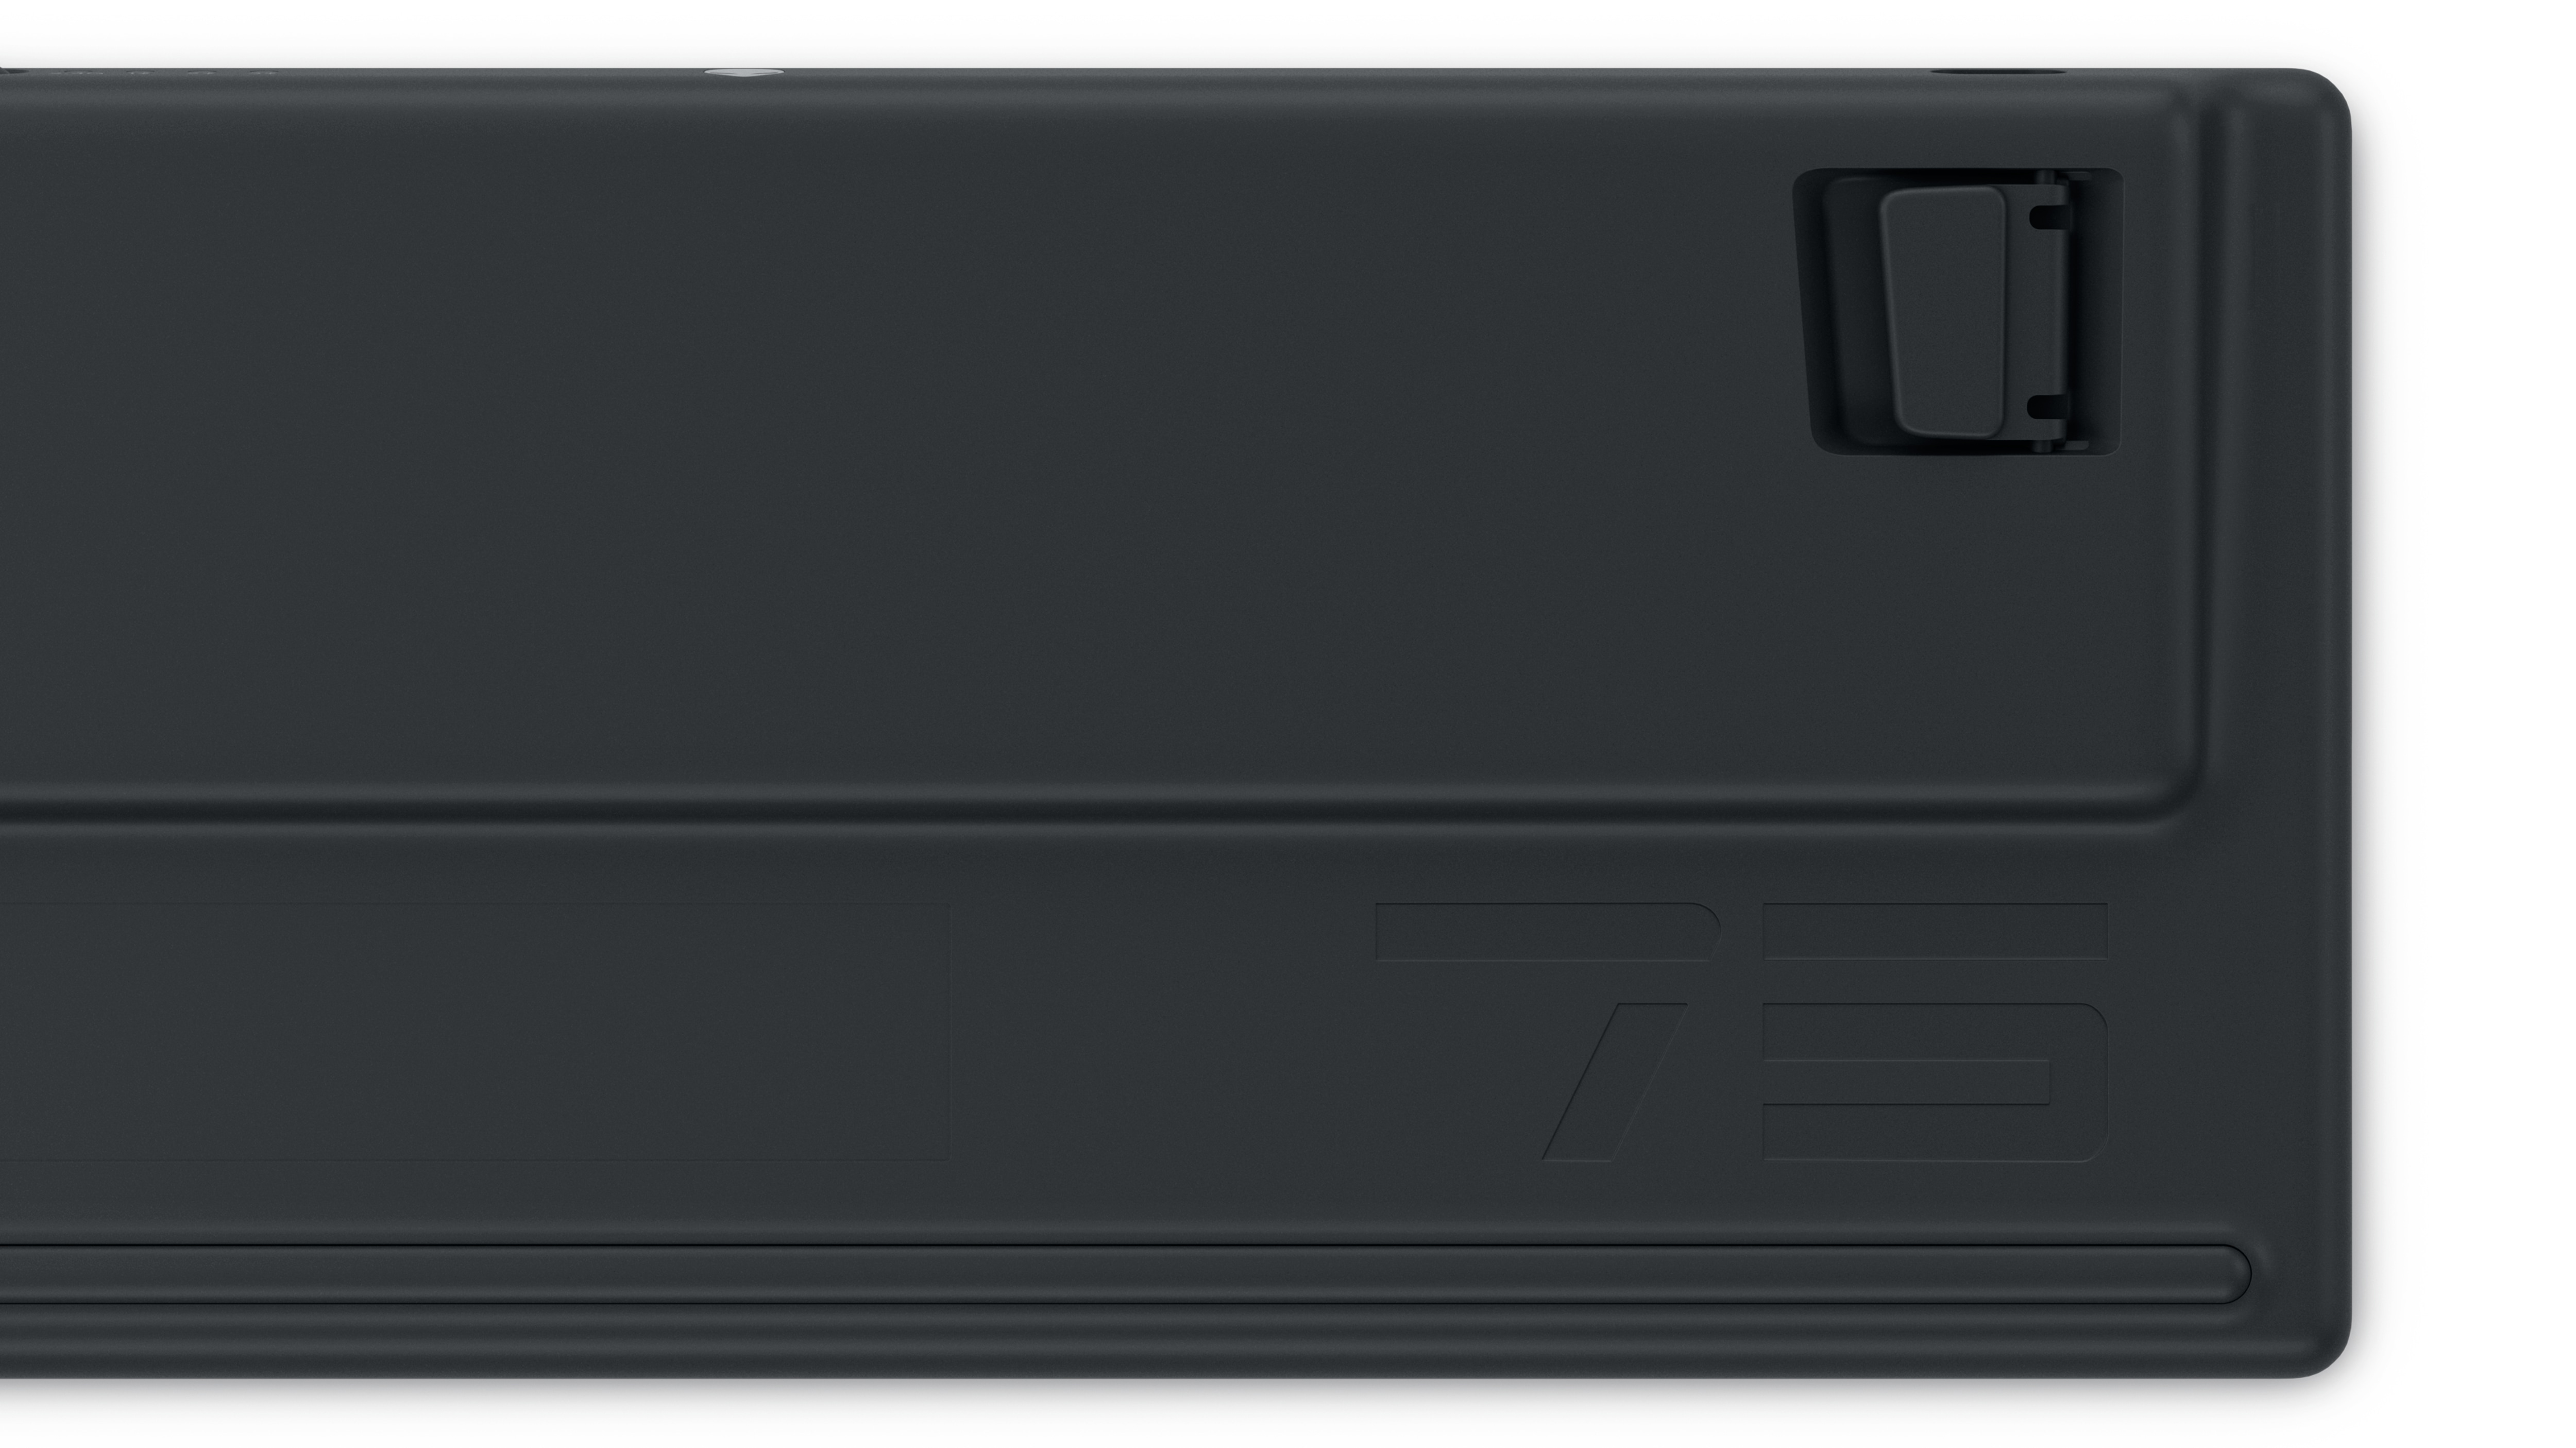 Dell Alienware Pro trådløst spilltastatur som viser baksiden av produktet.